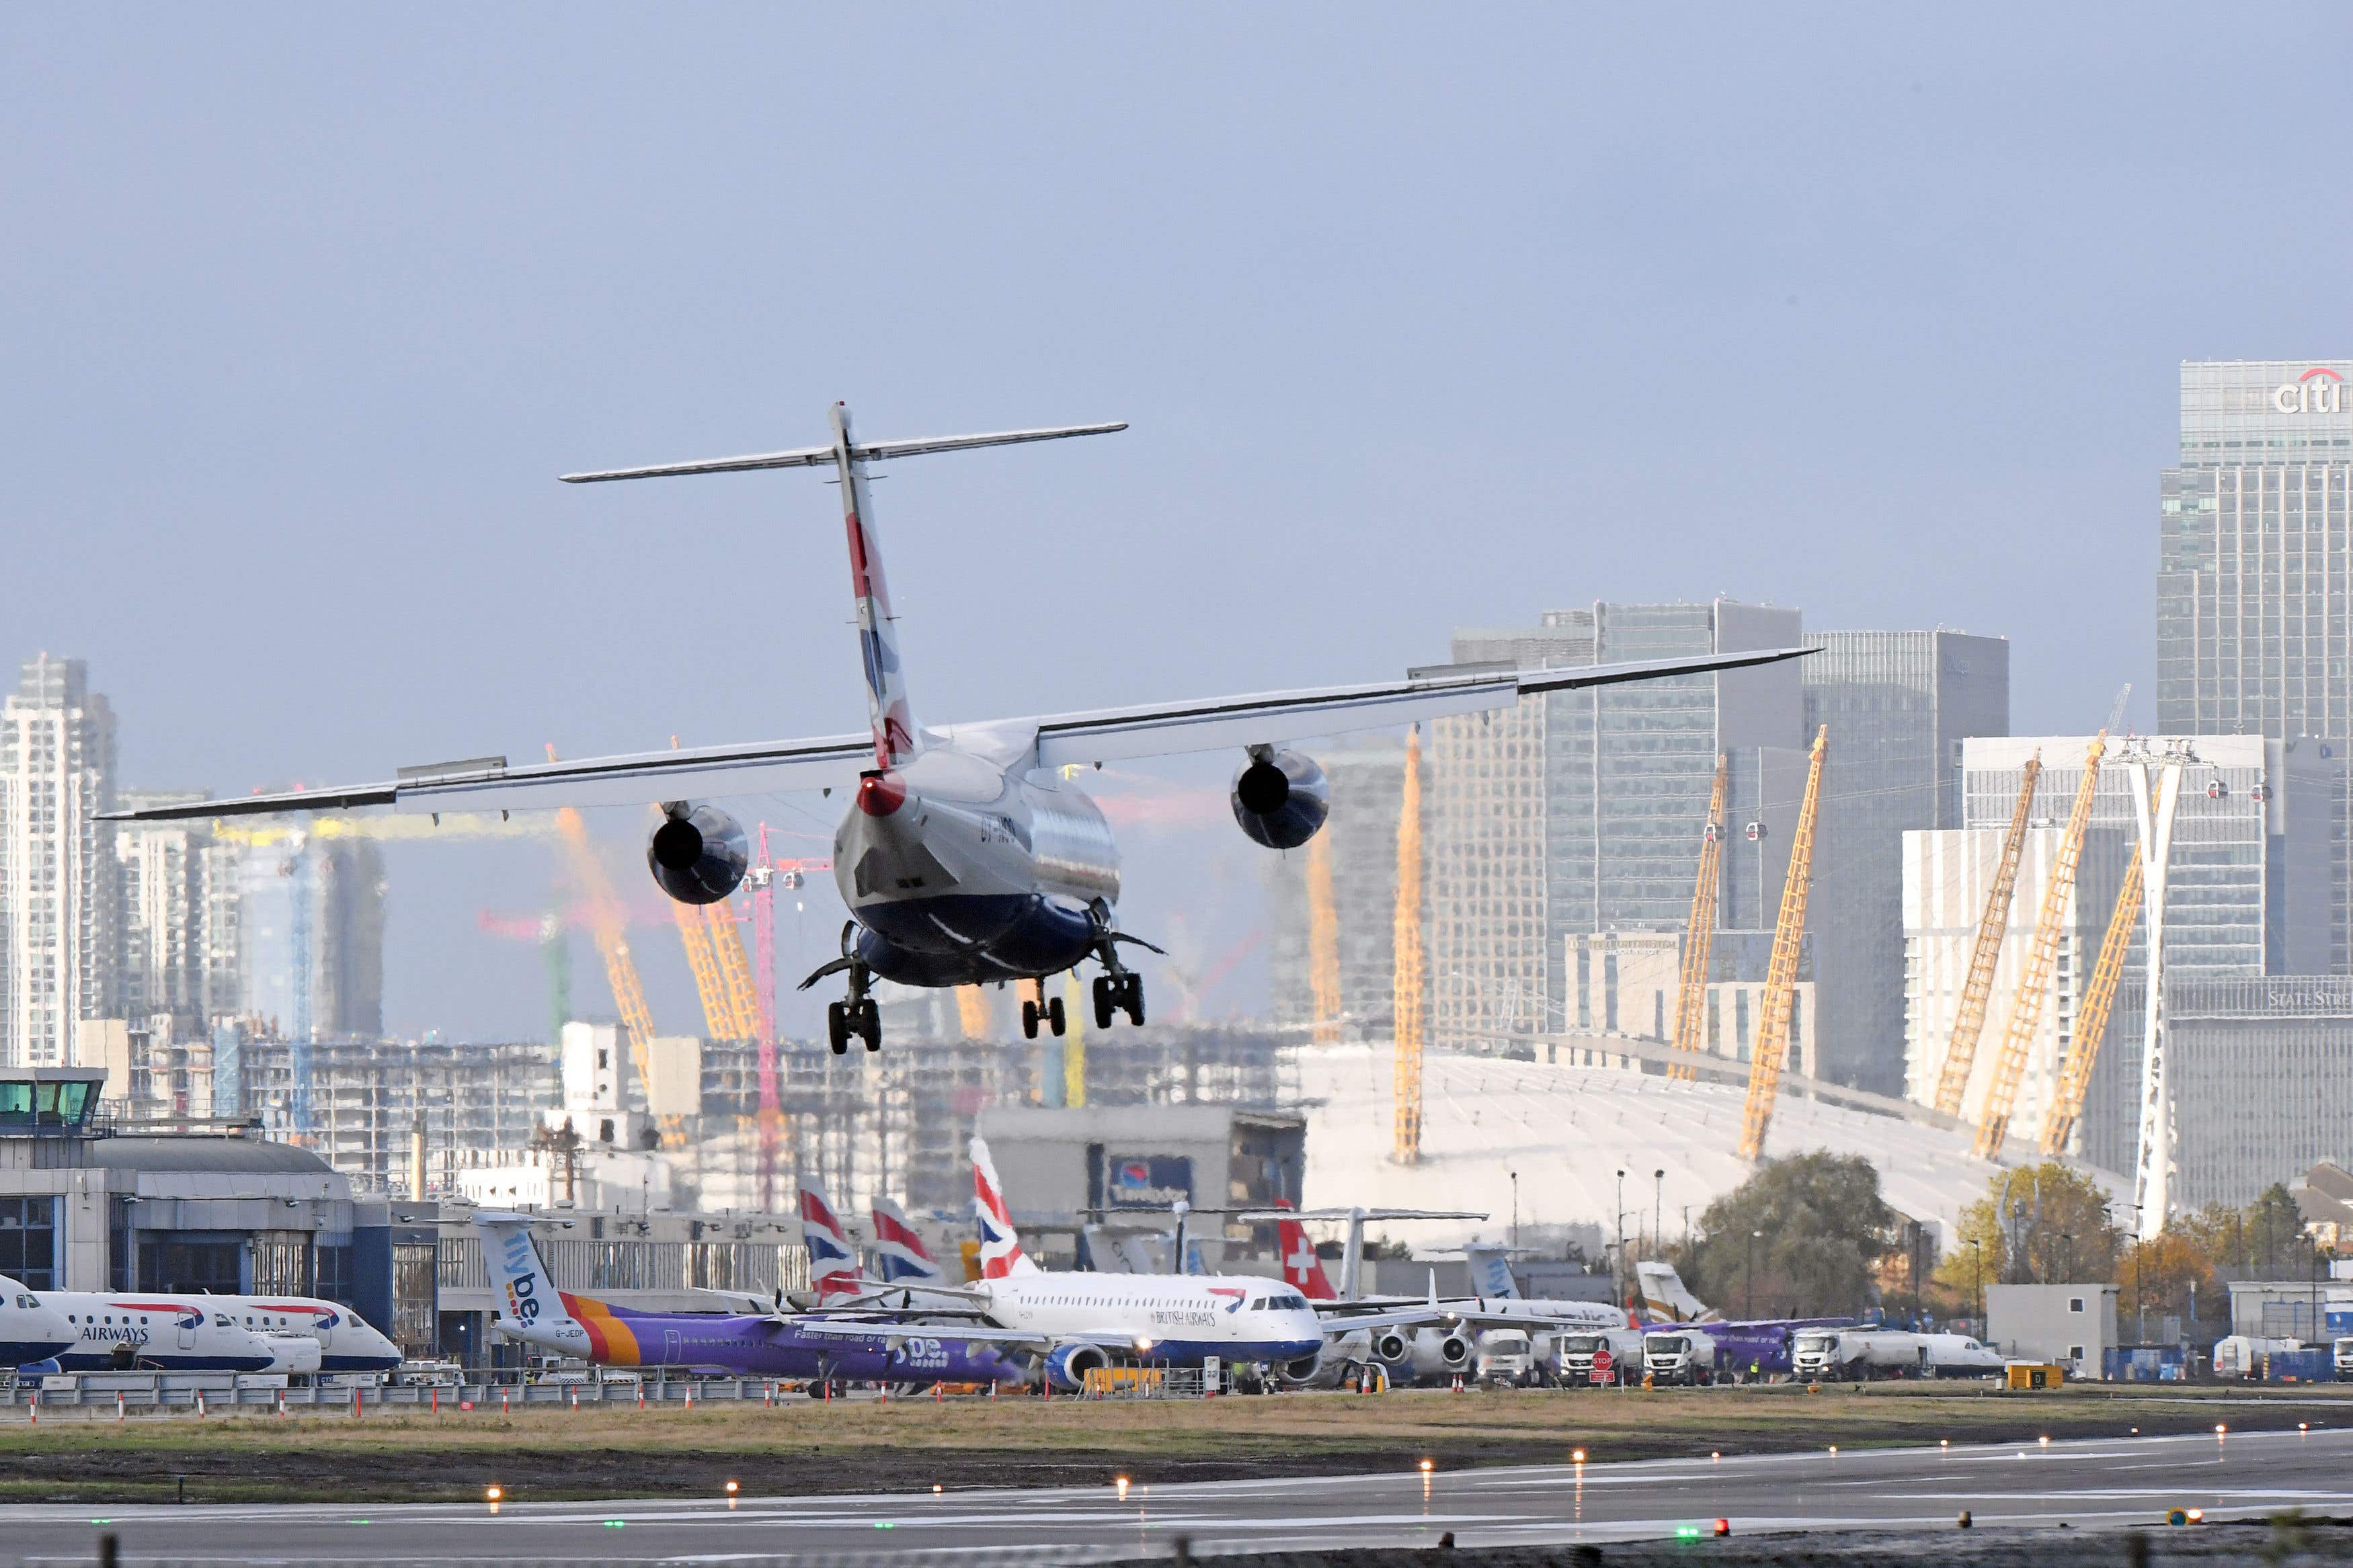 A plane landing at London City Airport